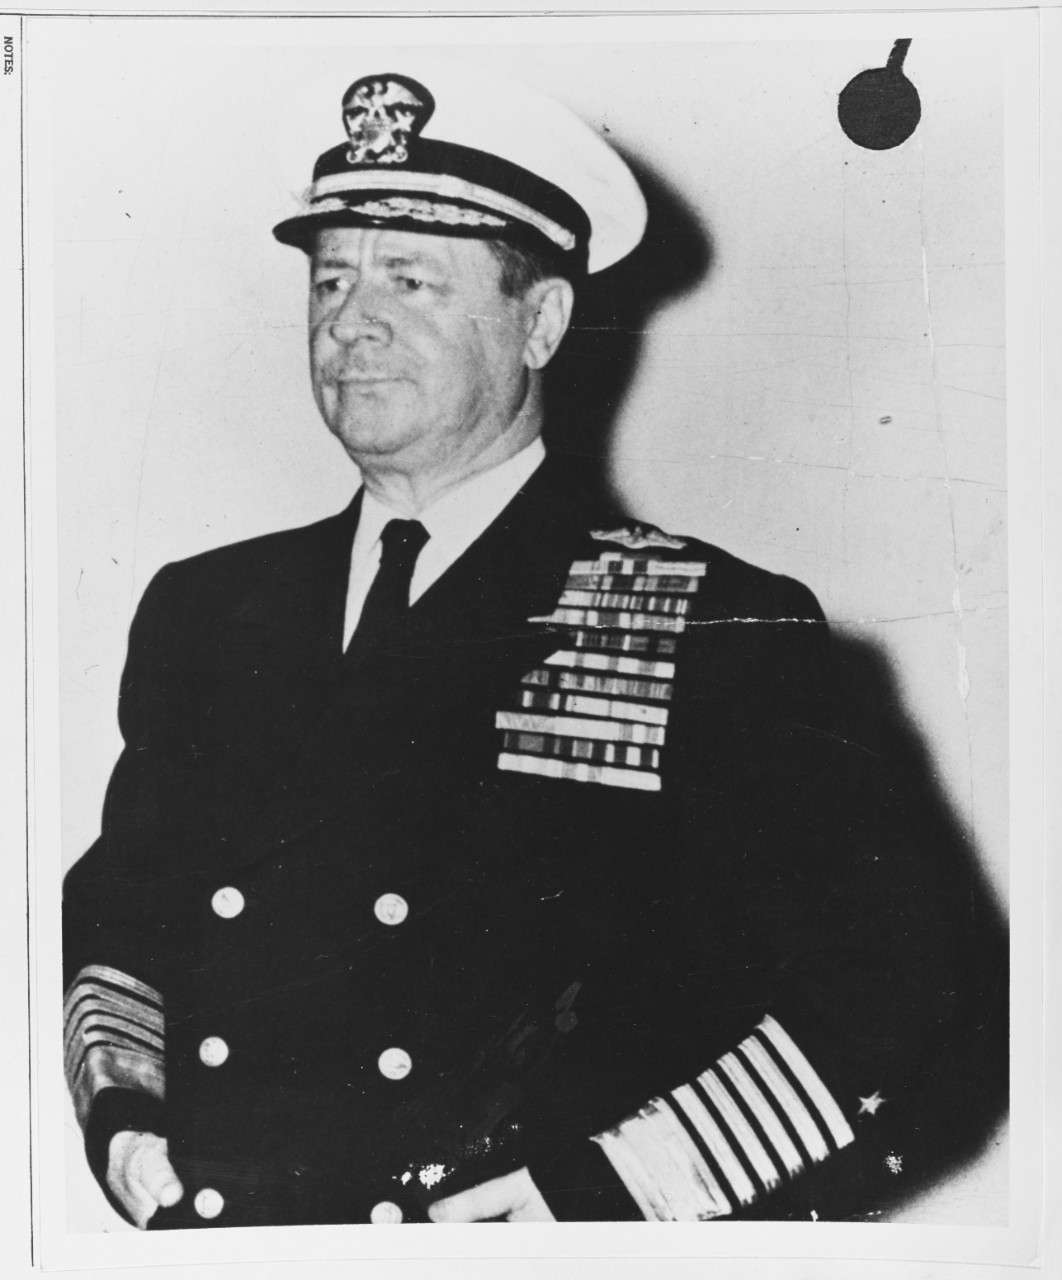 Mr. Robert Benchley, "Civilian Admiral, USNR."